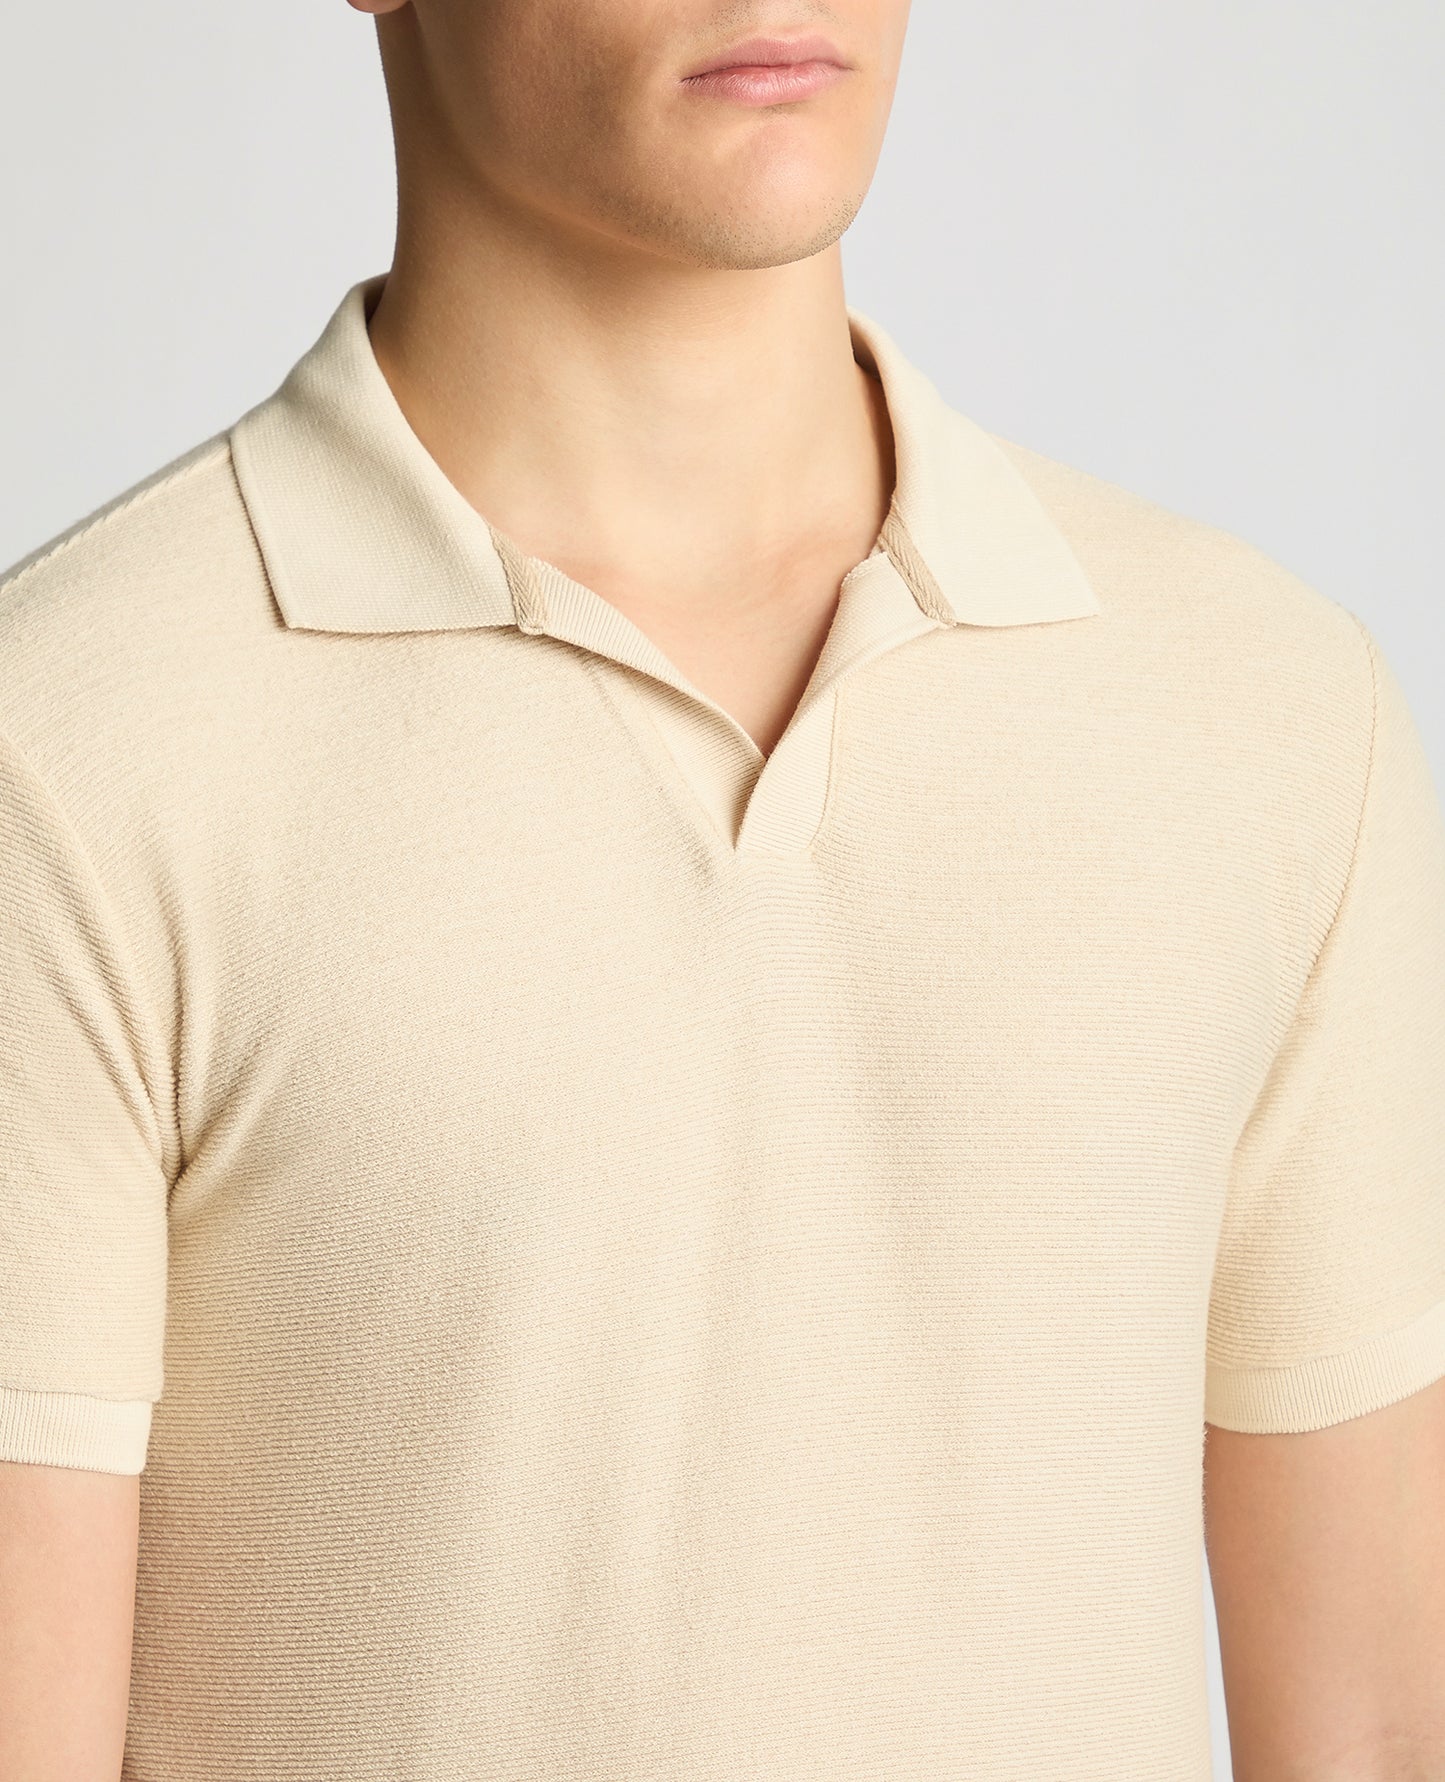 Remus Uomo  Open Collar Shirt - Cream